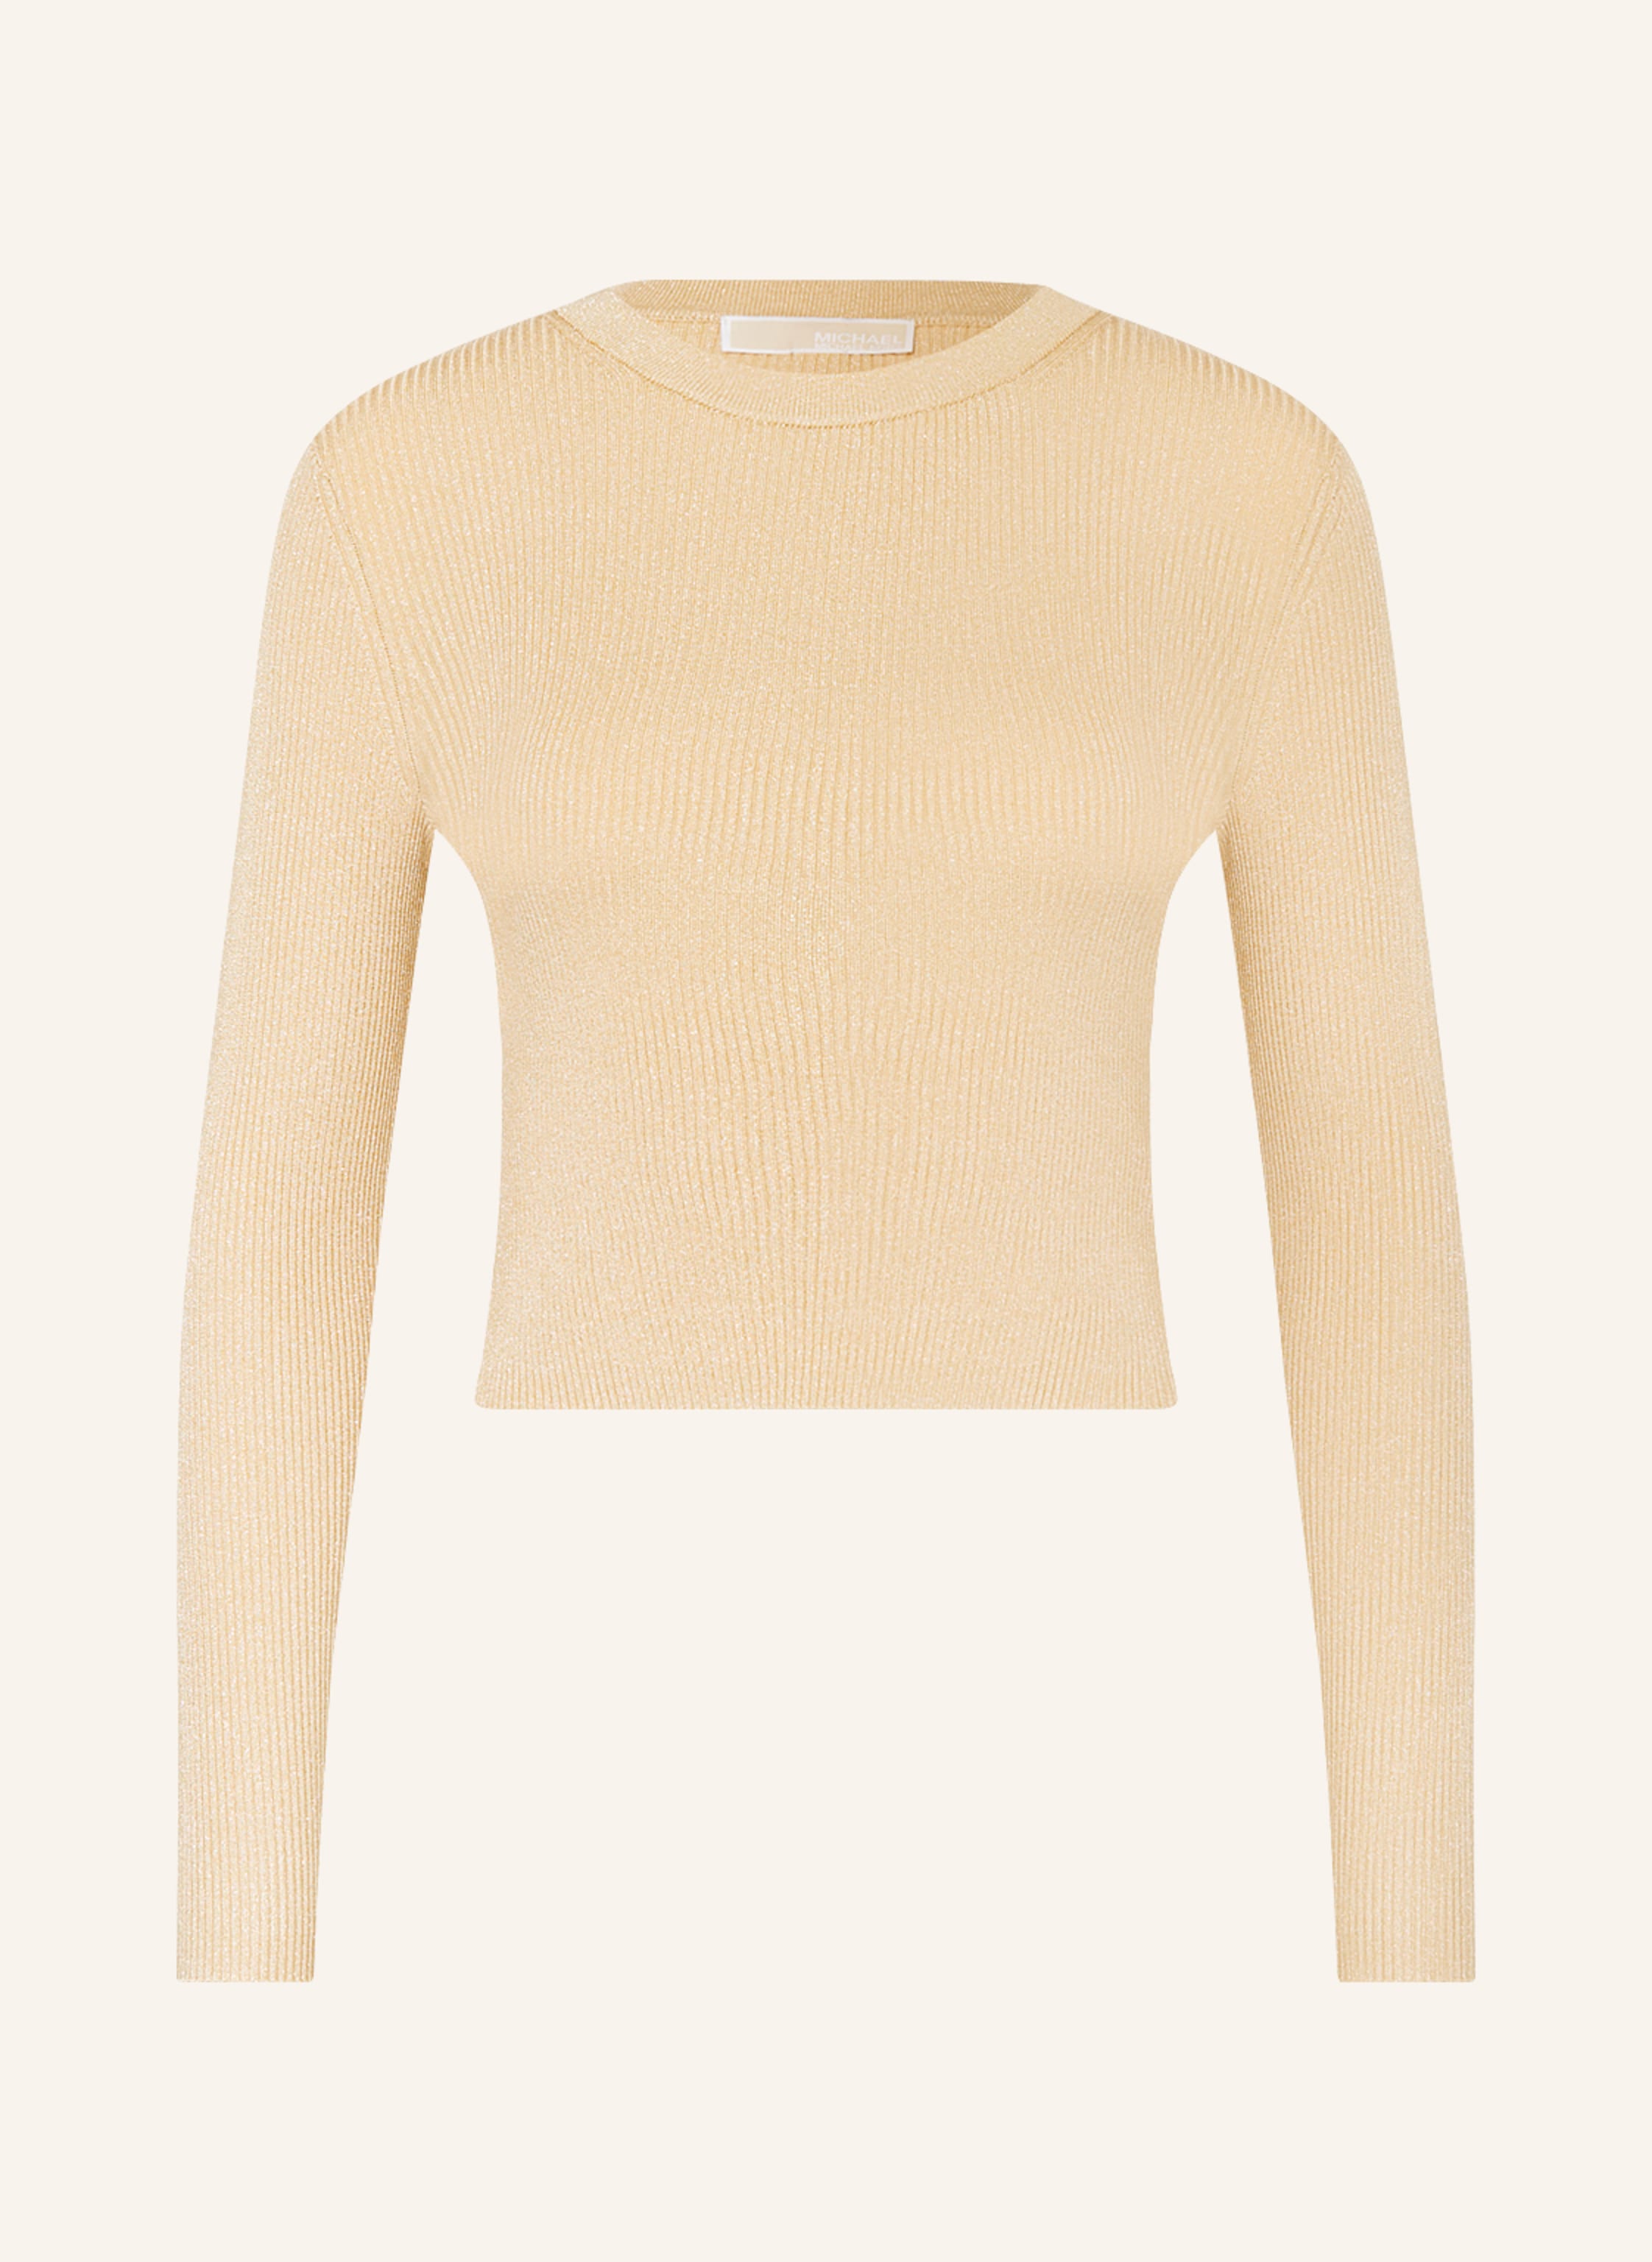 MICHAEL KORS Sweater with glitter thread in gold | Breuninger